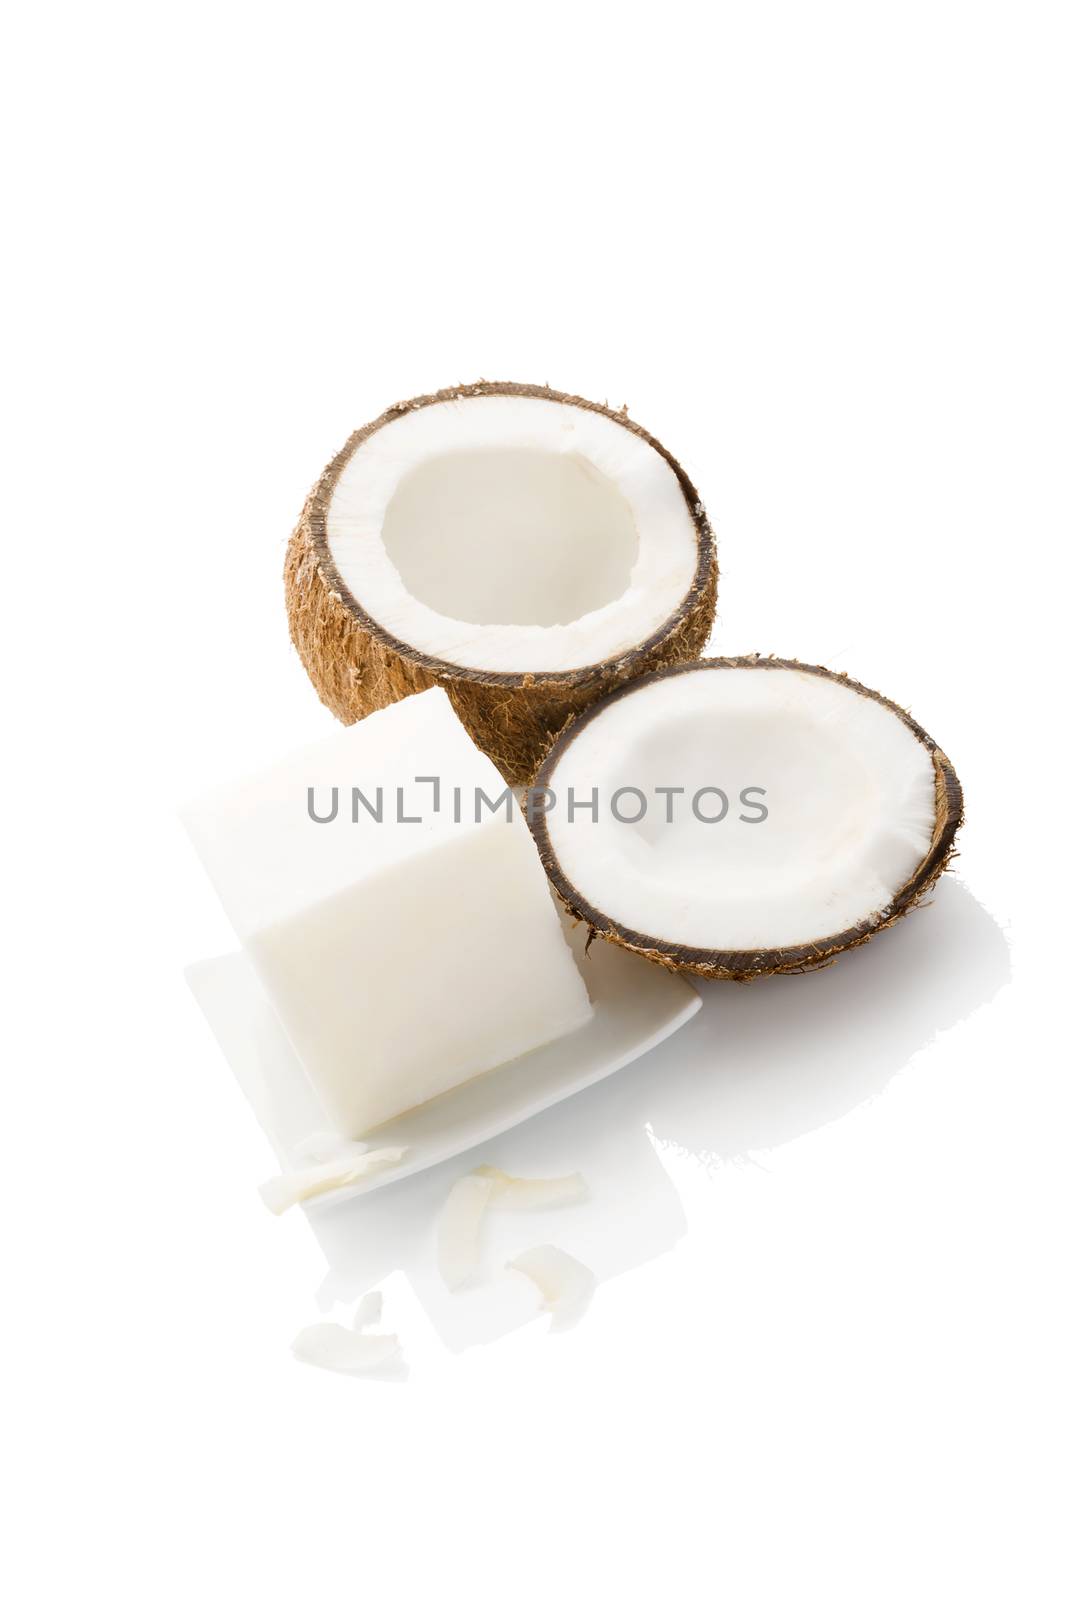 Coconut oil. by eskymaks